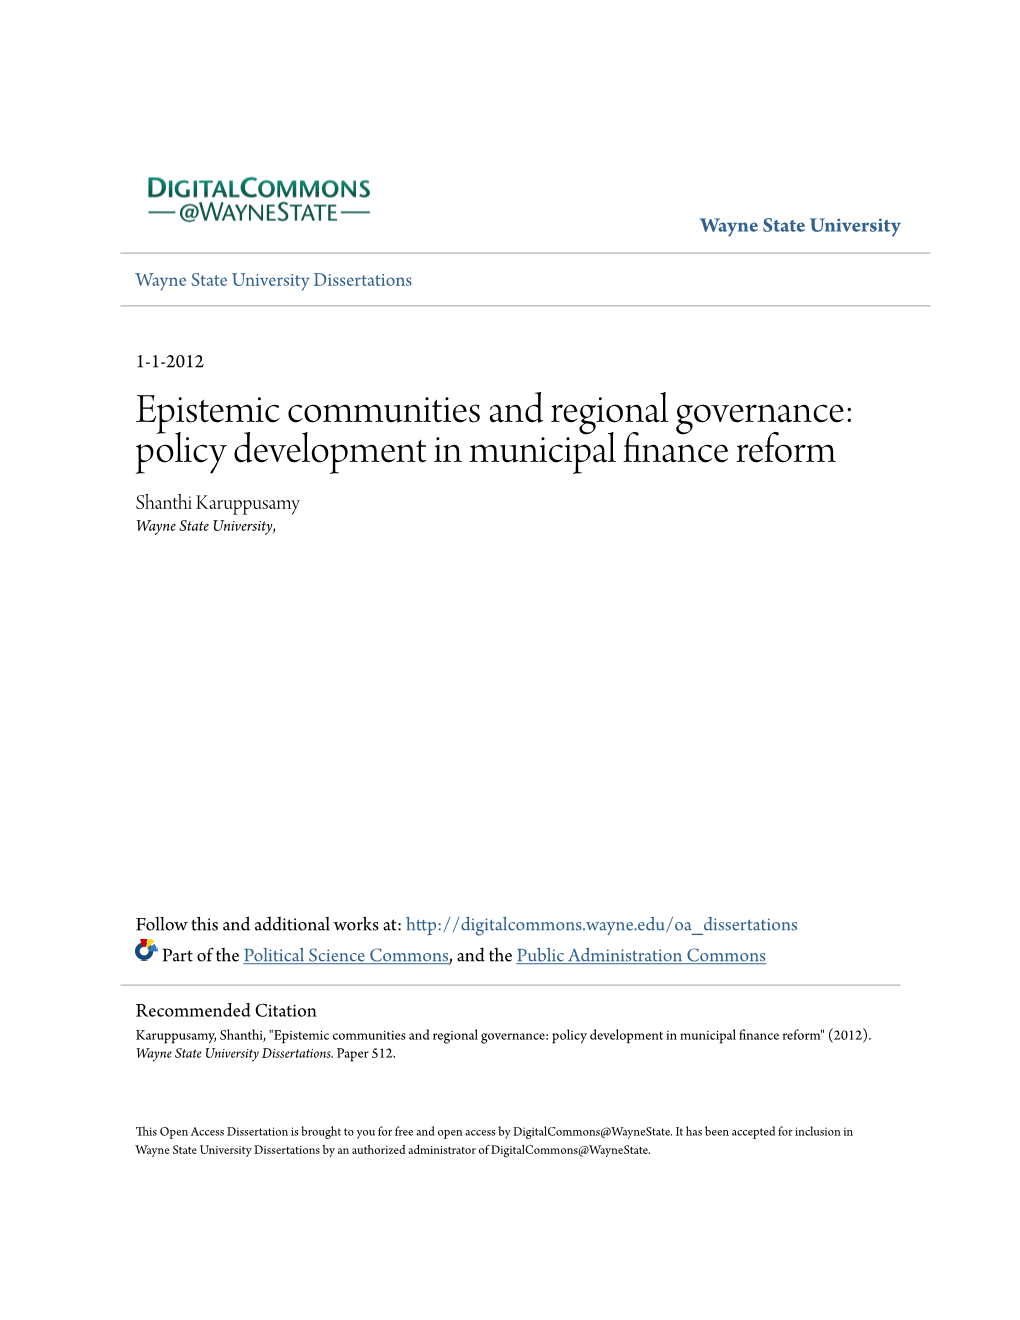 Epistemic Communities and Regional Governance: Policy Development in Municipal Finance Reform Shanthi Karuppusamy Wayne State University